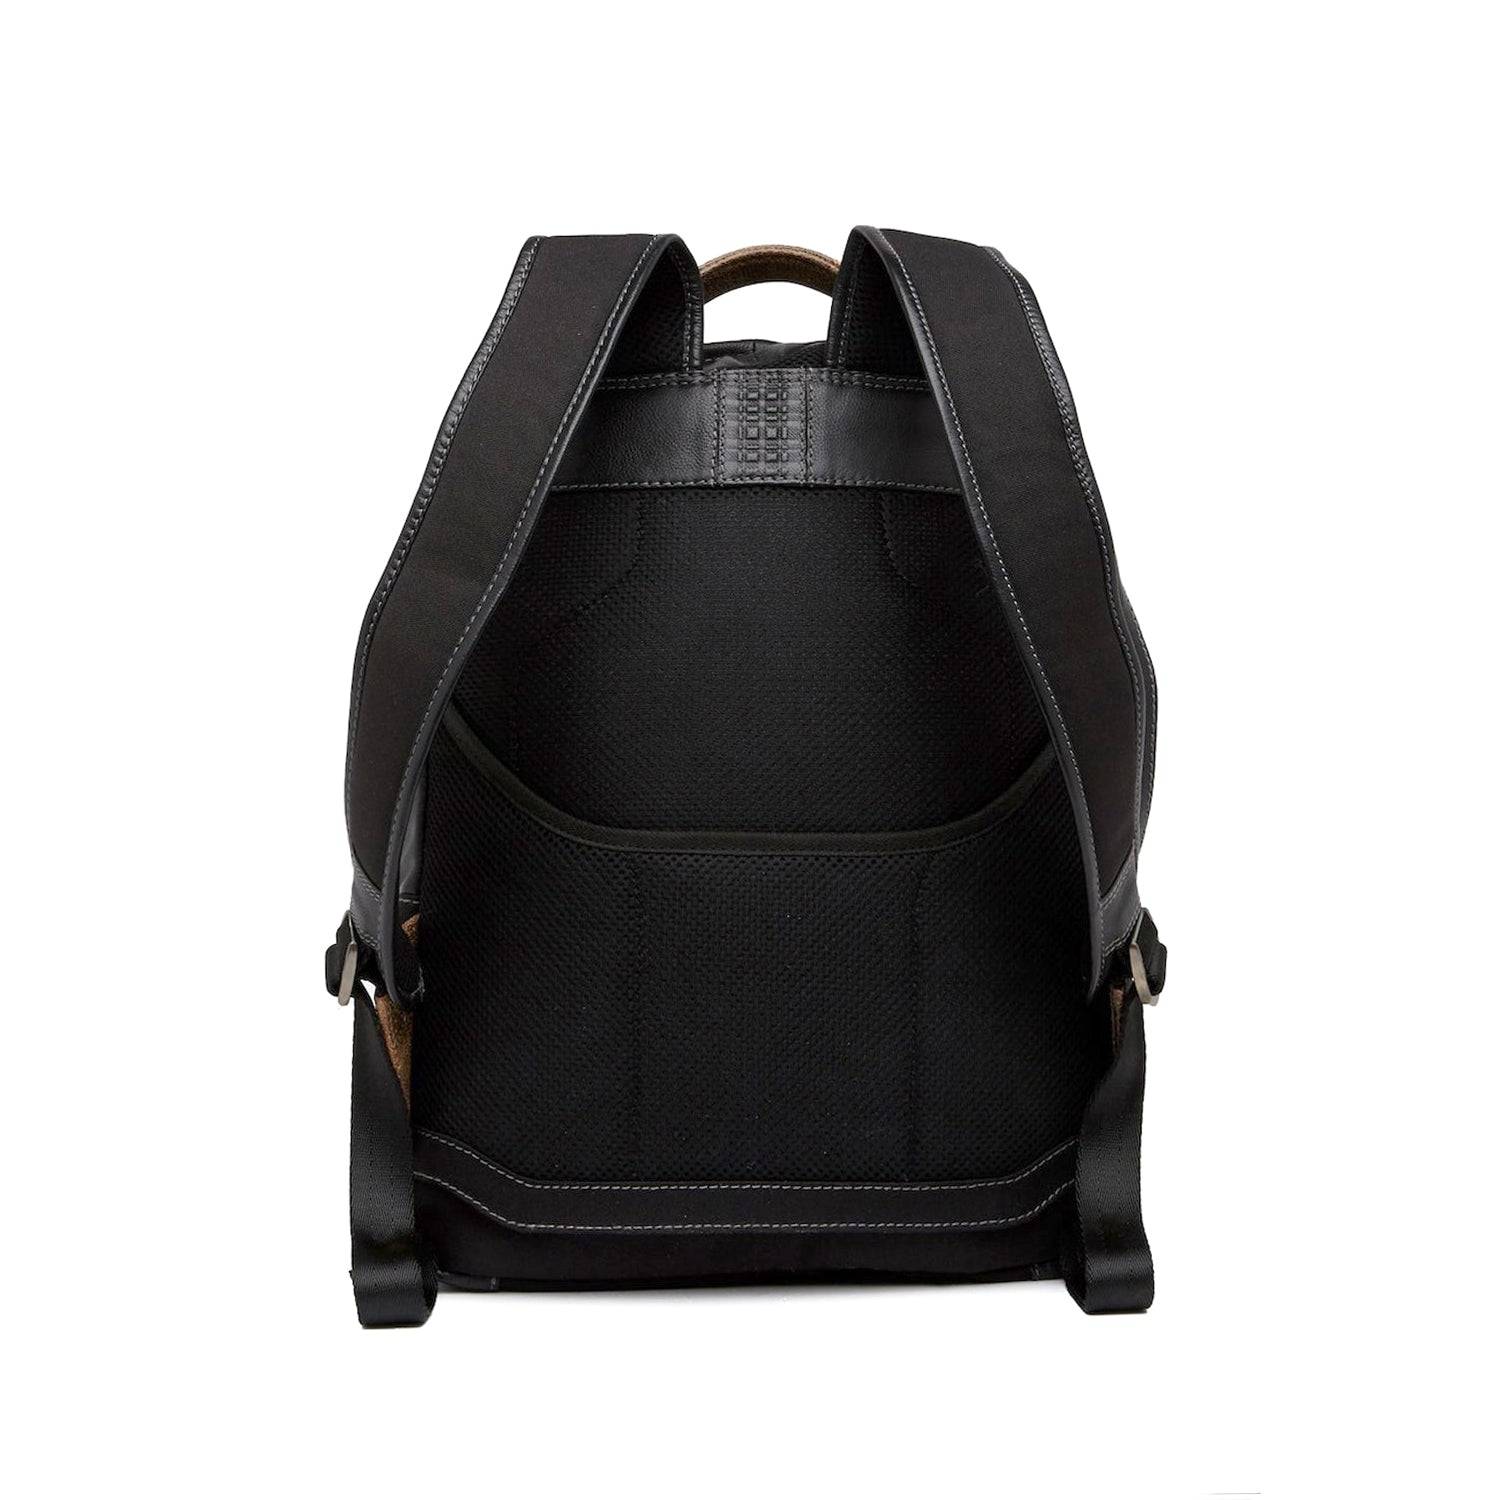 Garth LTE Leather Urban Cross Body Bag – Boconi Bags & Leather